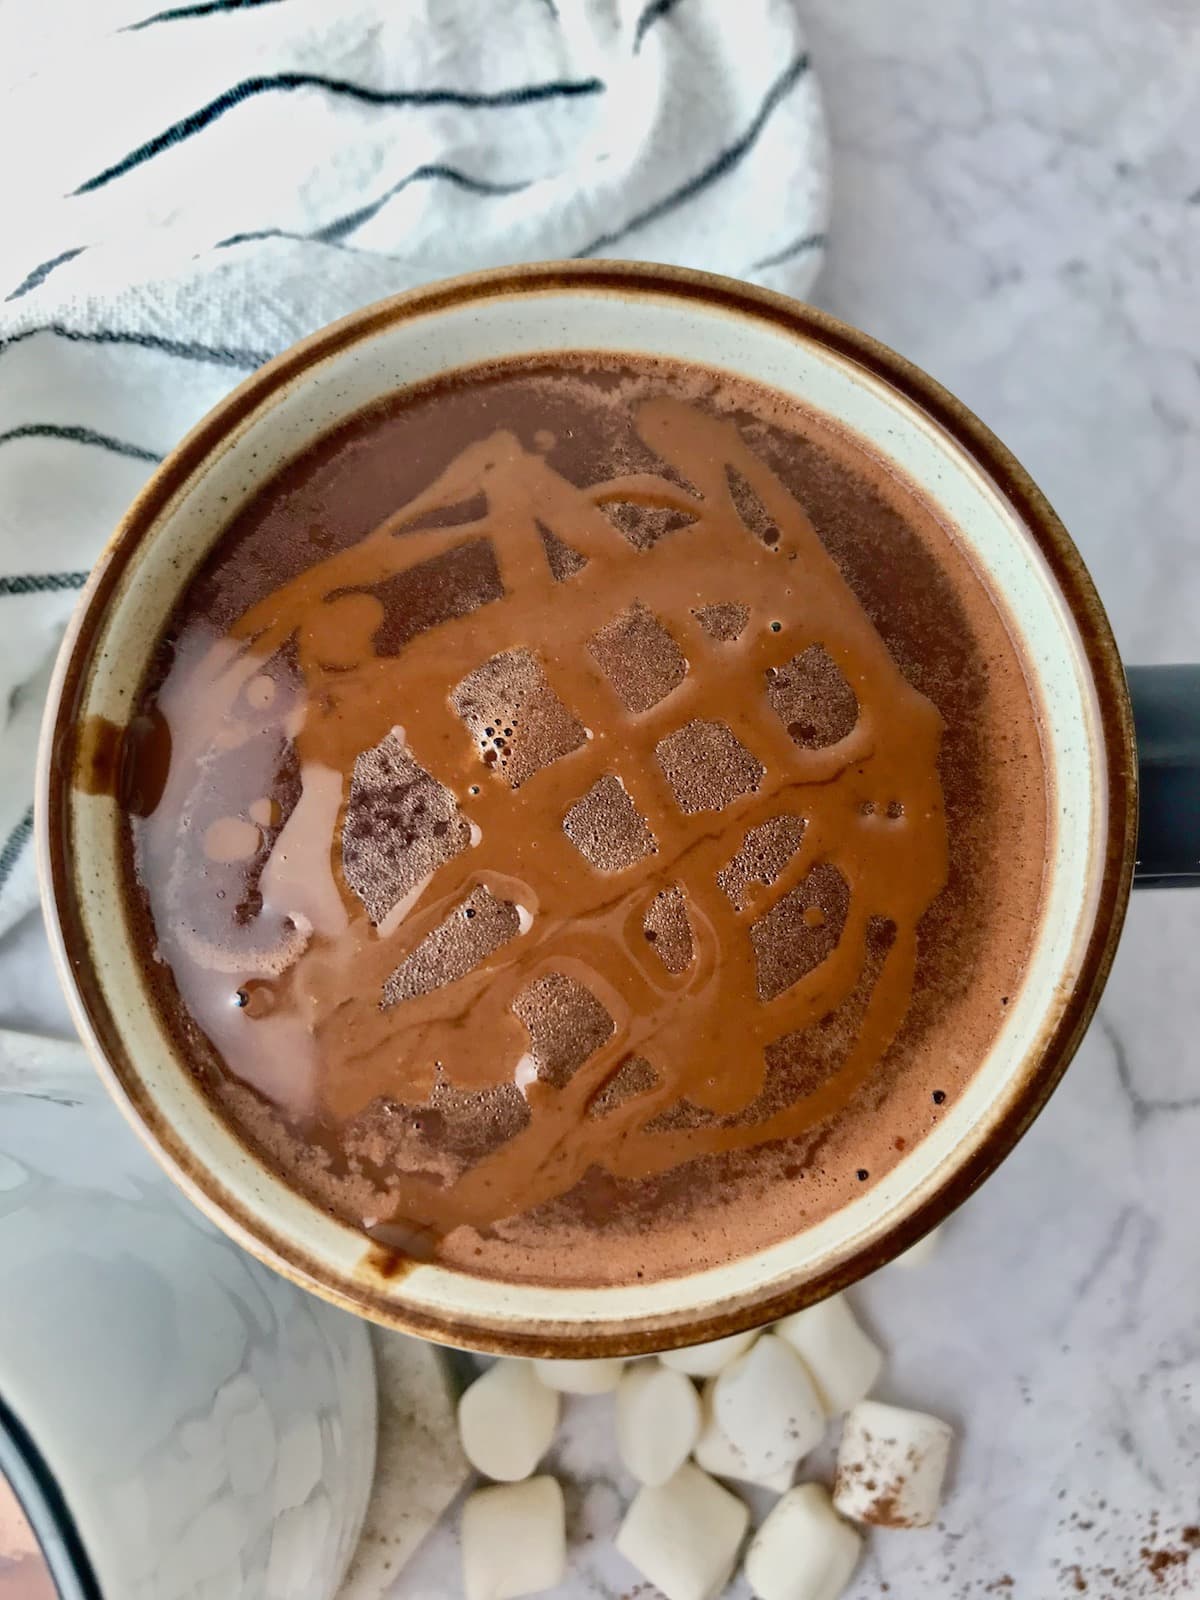 A mug of hot chocolate topped with chocolate sauce.